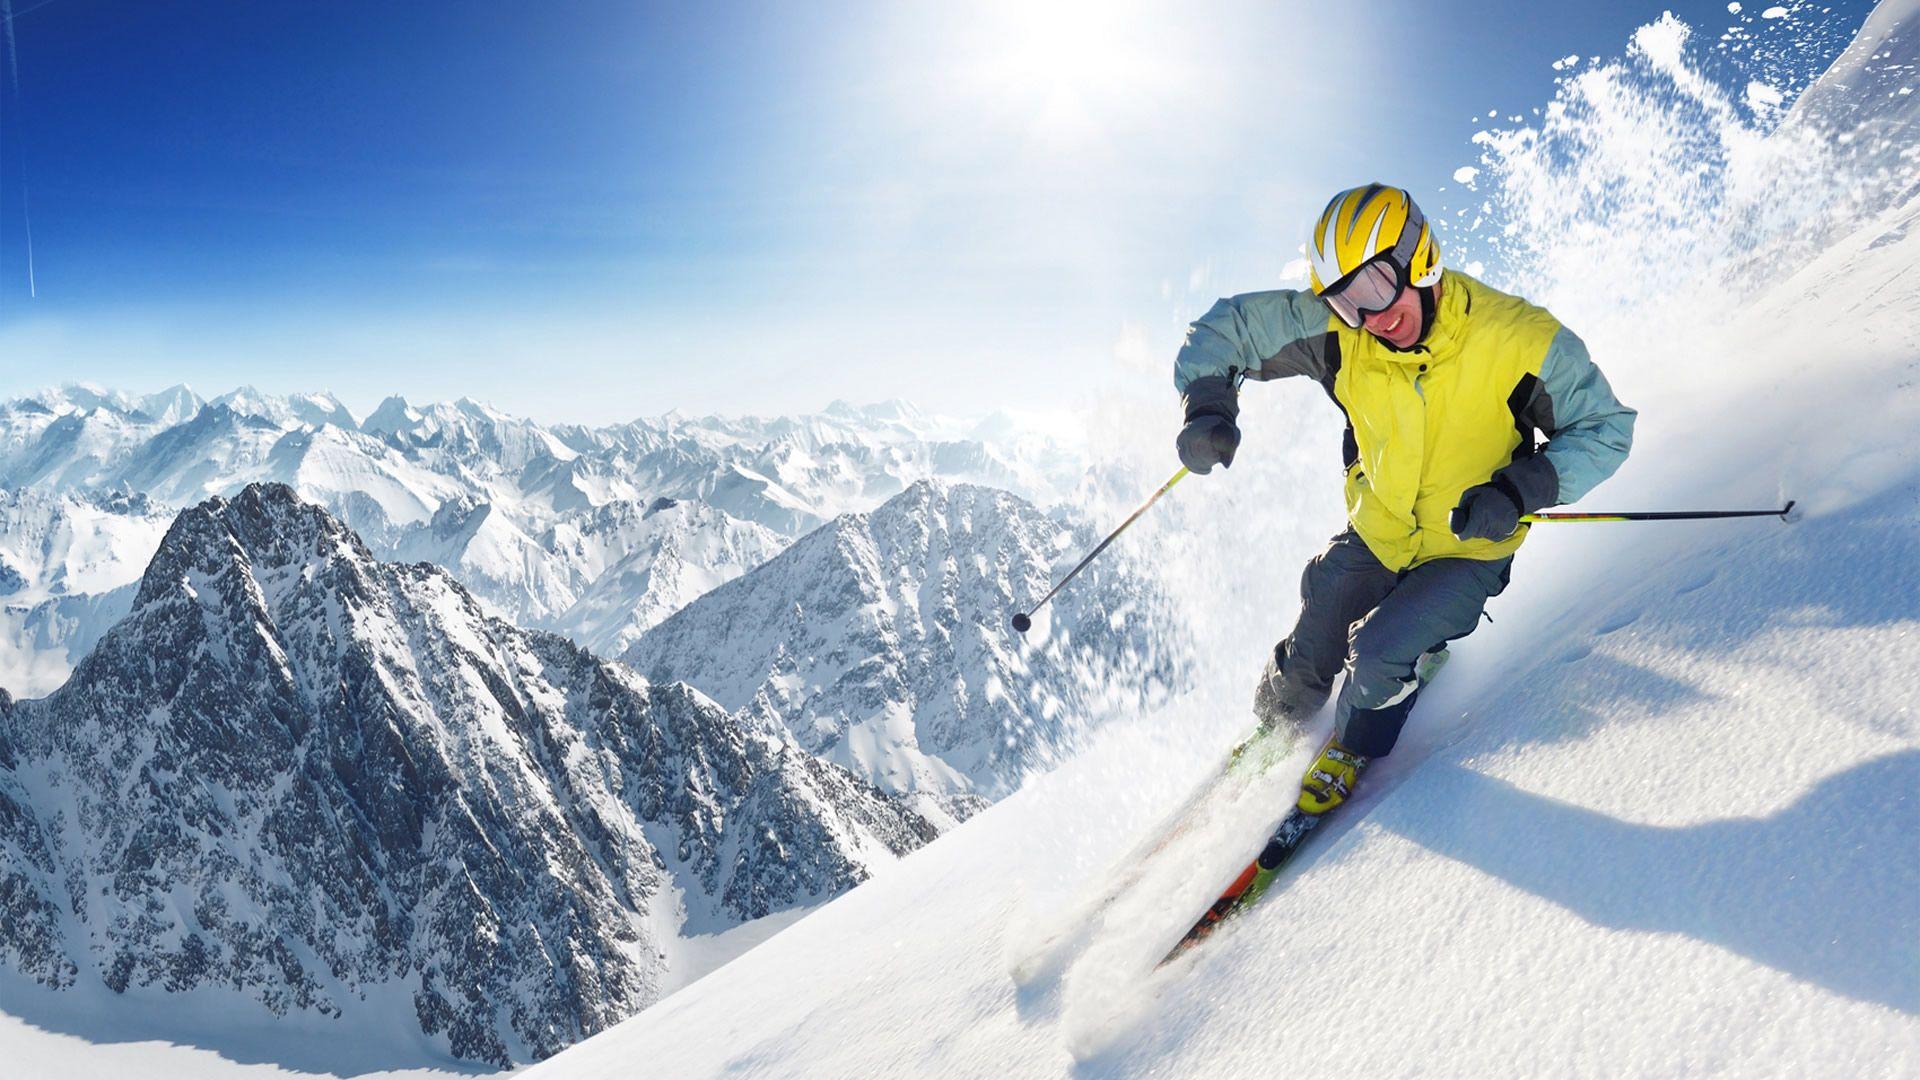 Skiing Desktop Wallpapers - Top Free ...